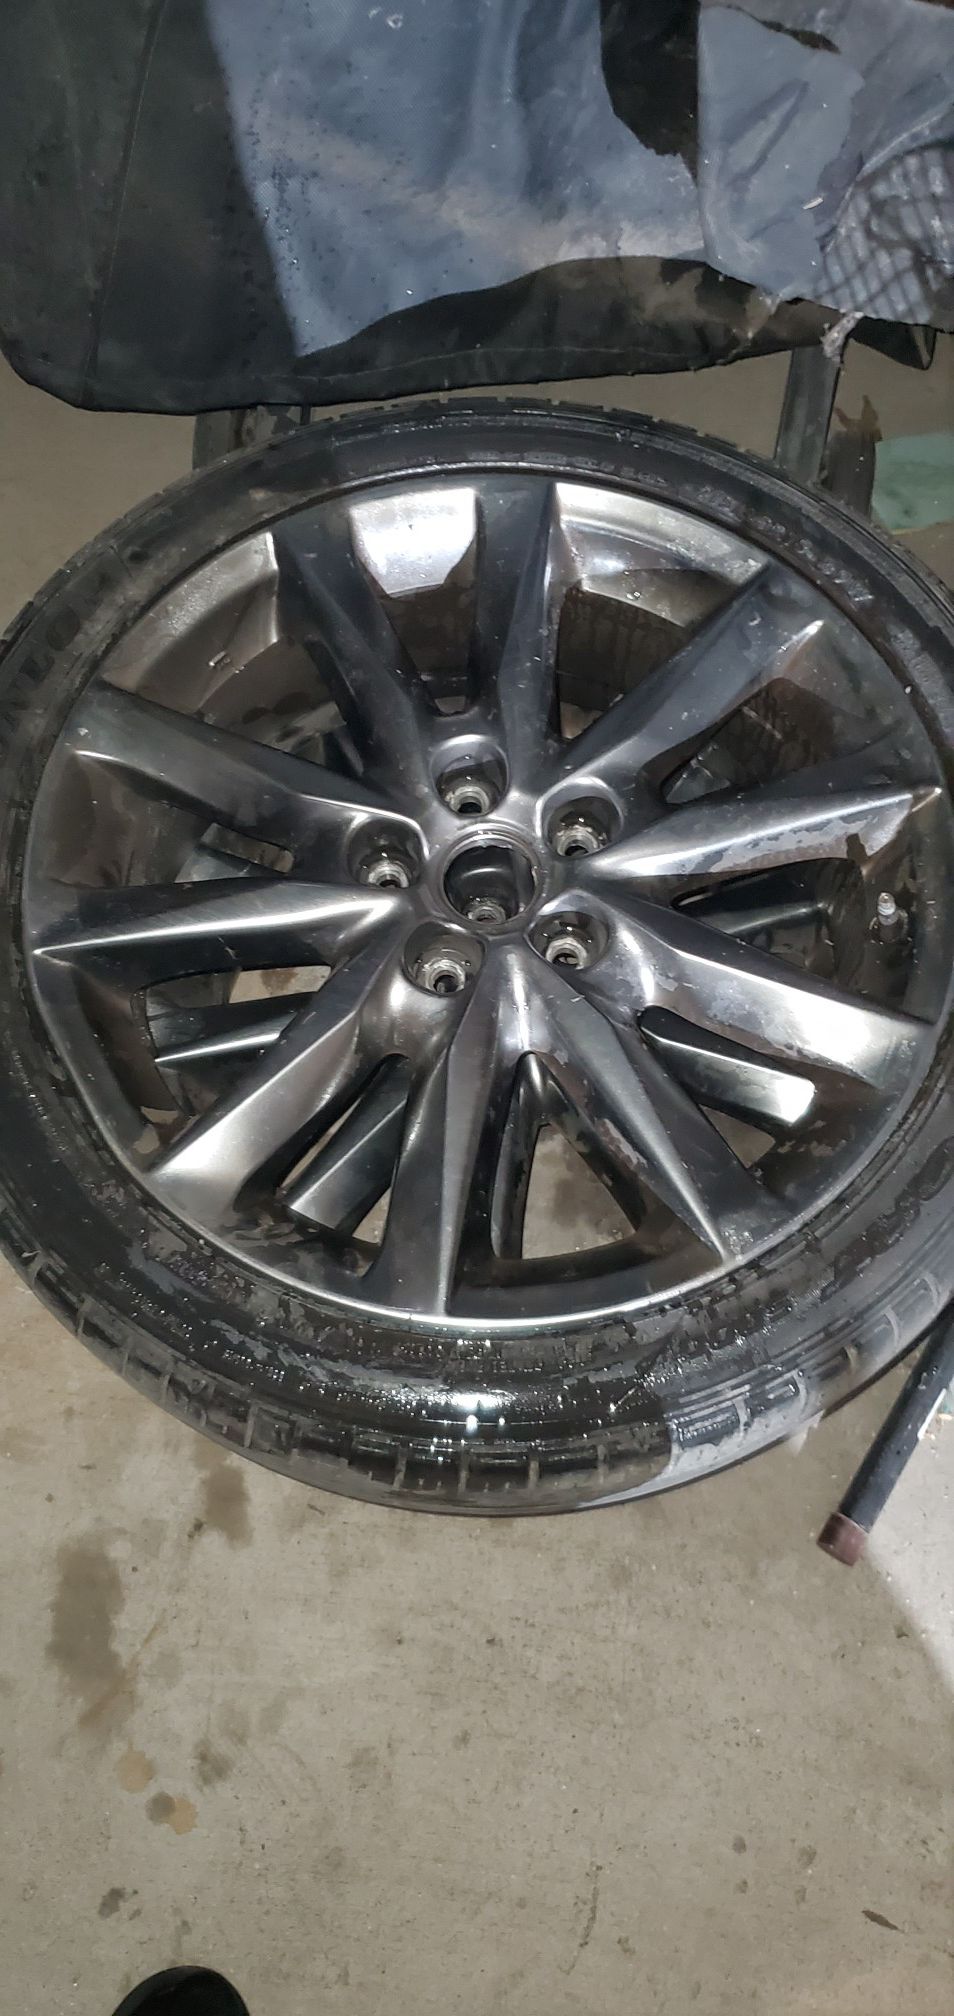 Mazda 3 rims used 18 inch one lil bent rim , tire size 215-45-18